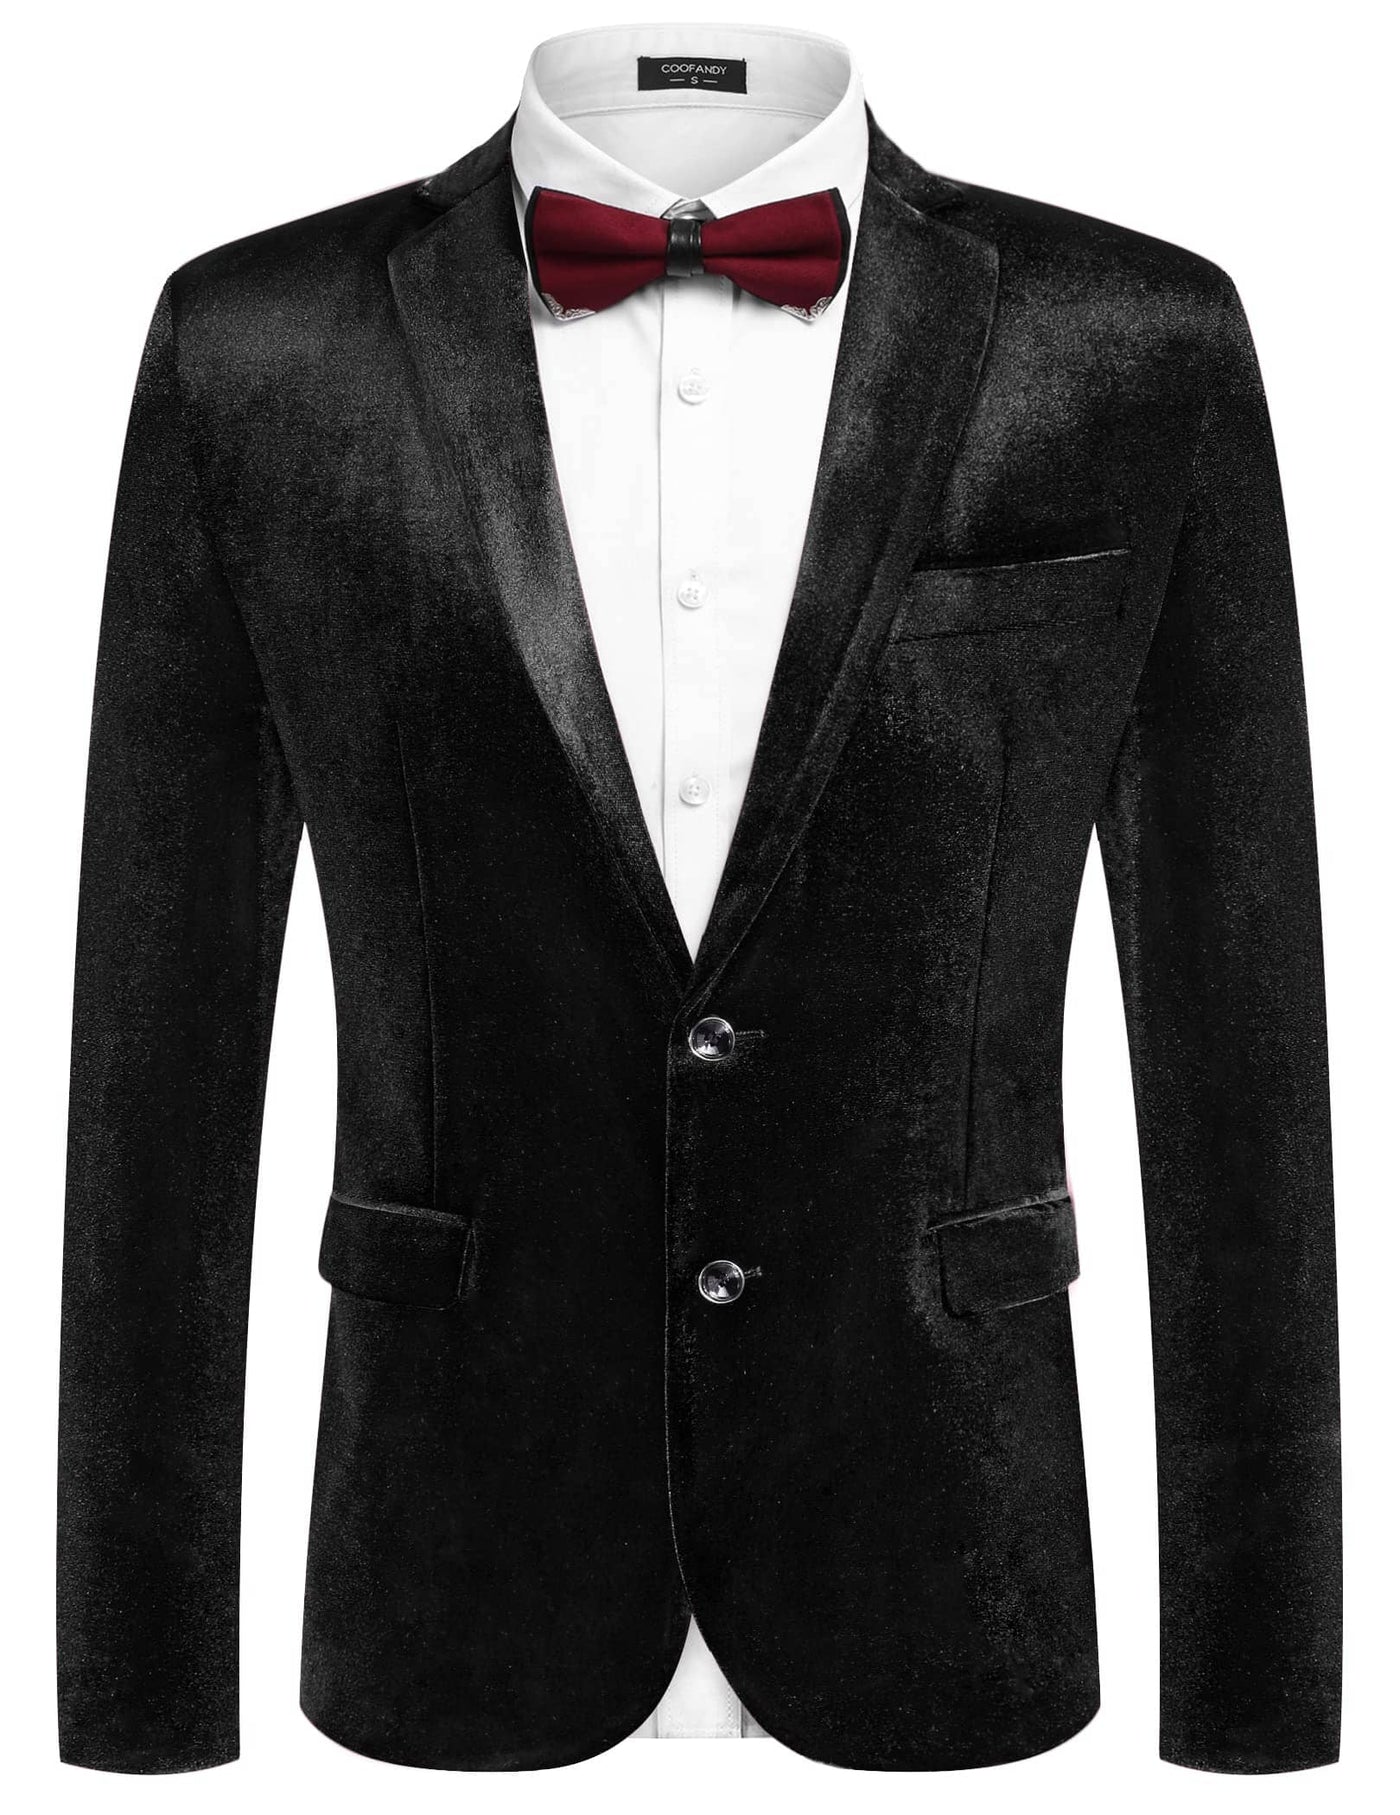 Floral Luxury Tuxedo Dinner Party Blazer (US Only) Blazer coofandy Solid Black S 